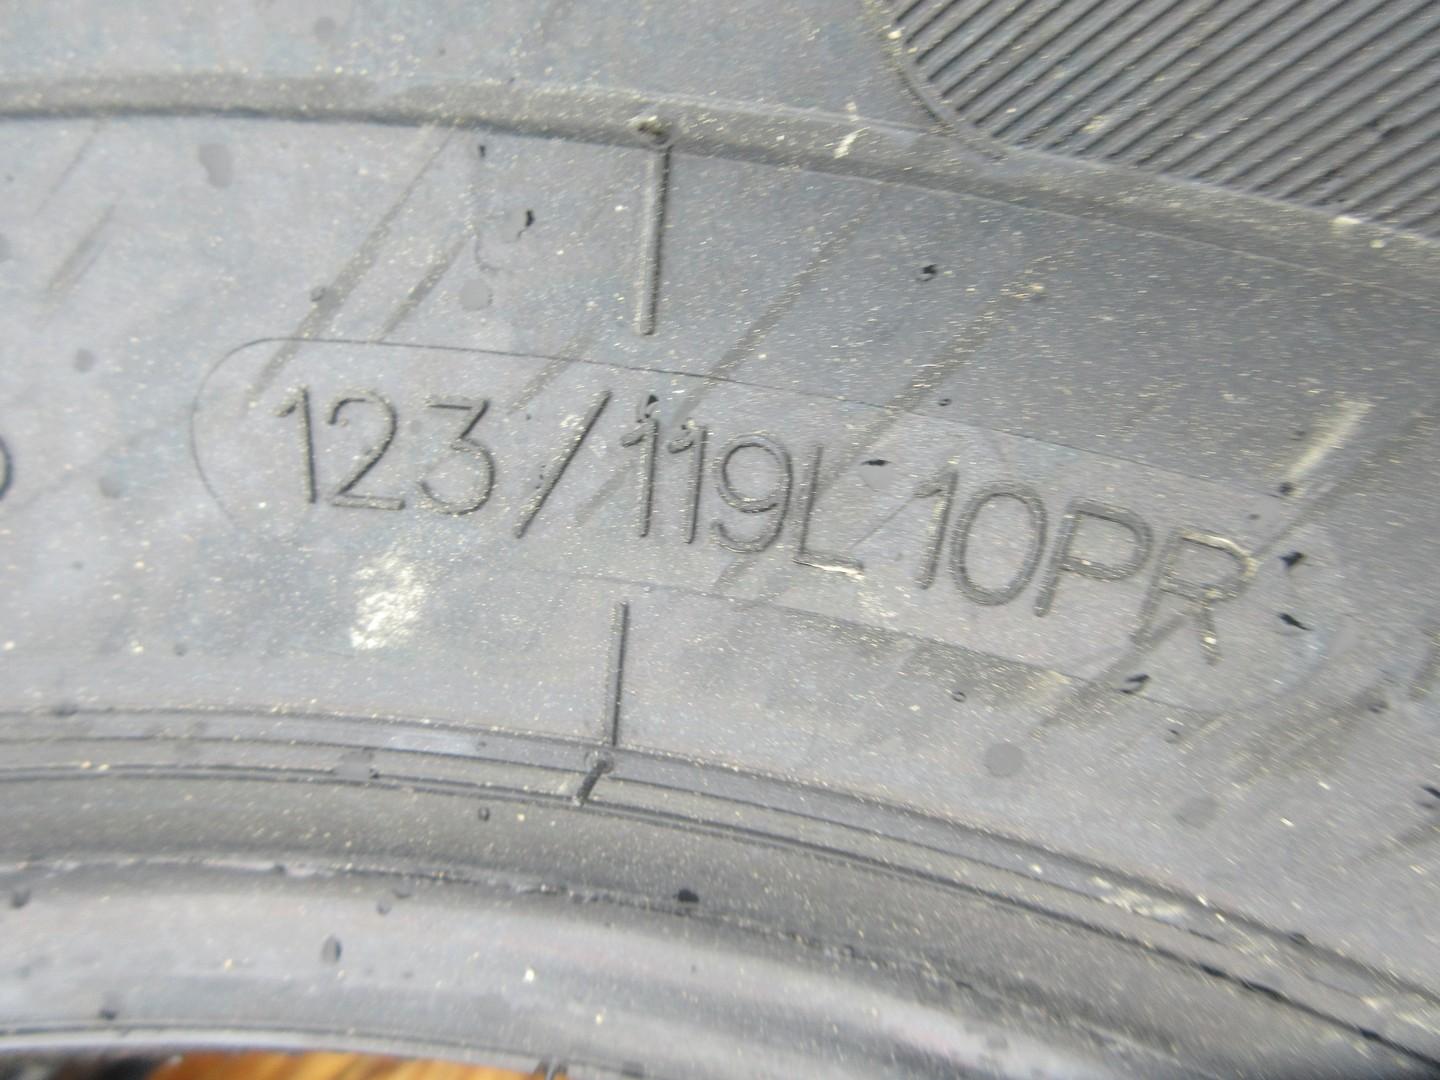 (4) Roadguider ST235/80R16 Trailer Tires